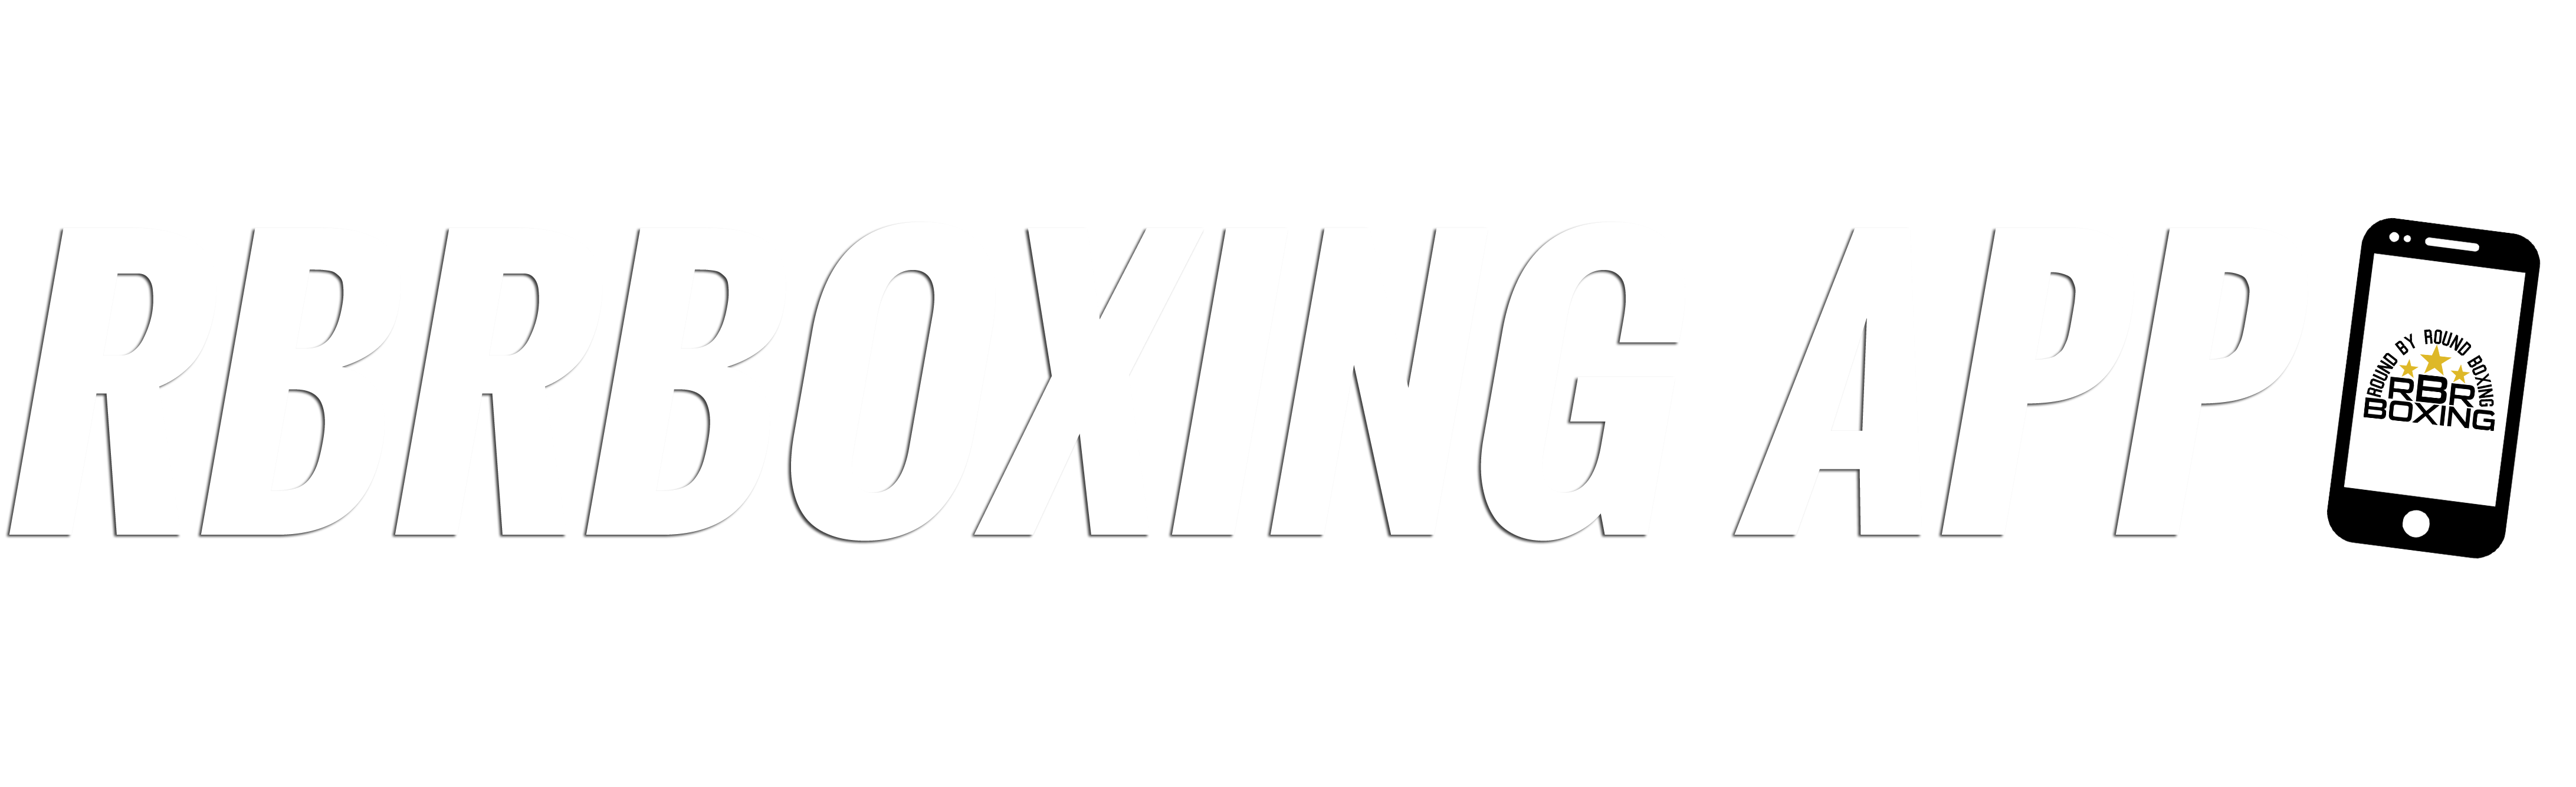 Boxing Mobile App